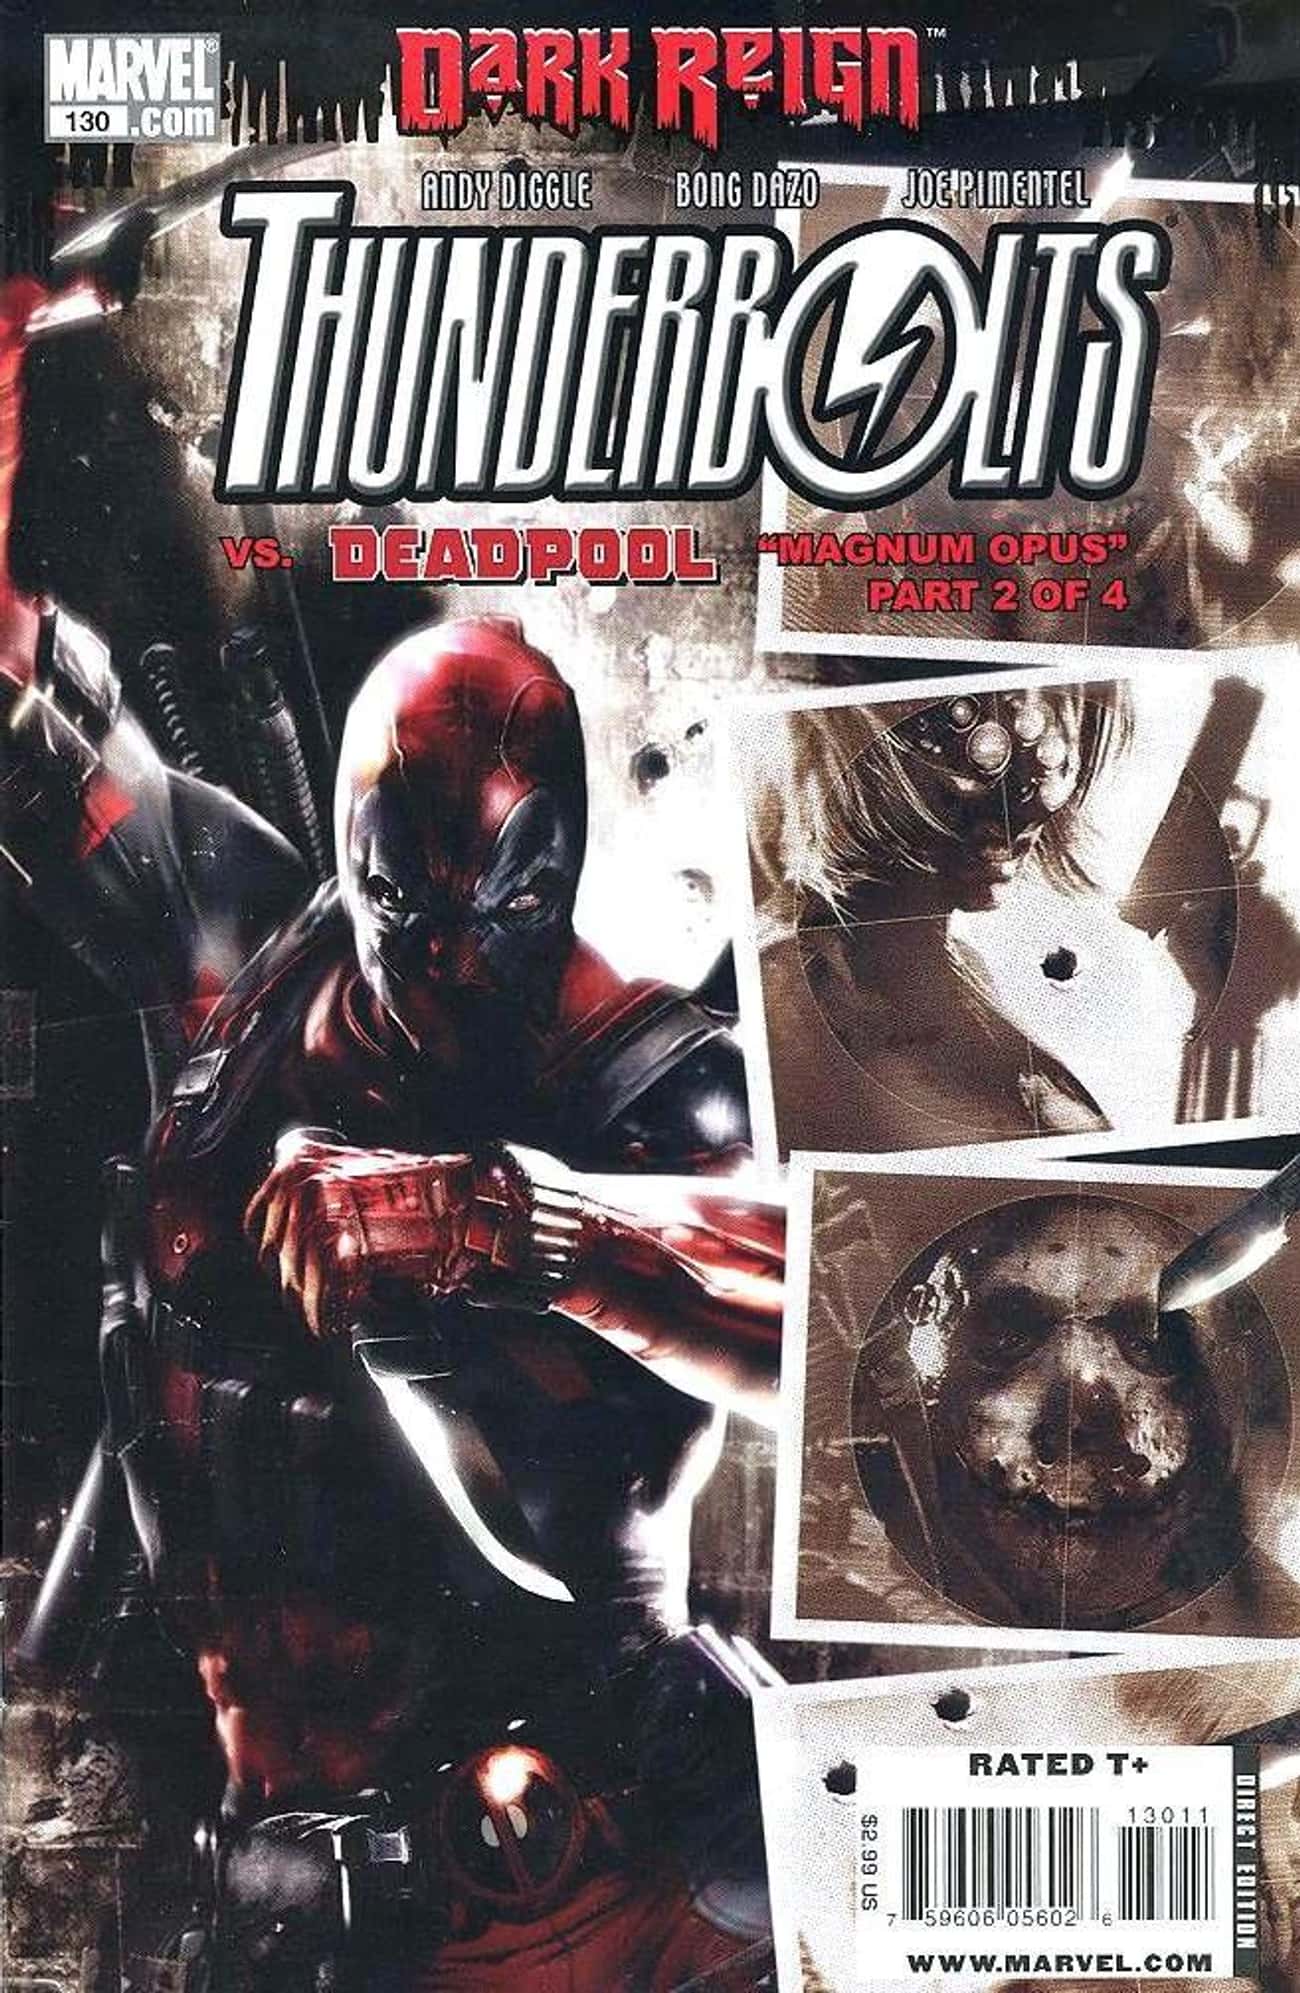 Deadpool And Thunderbolts